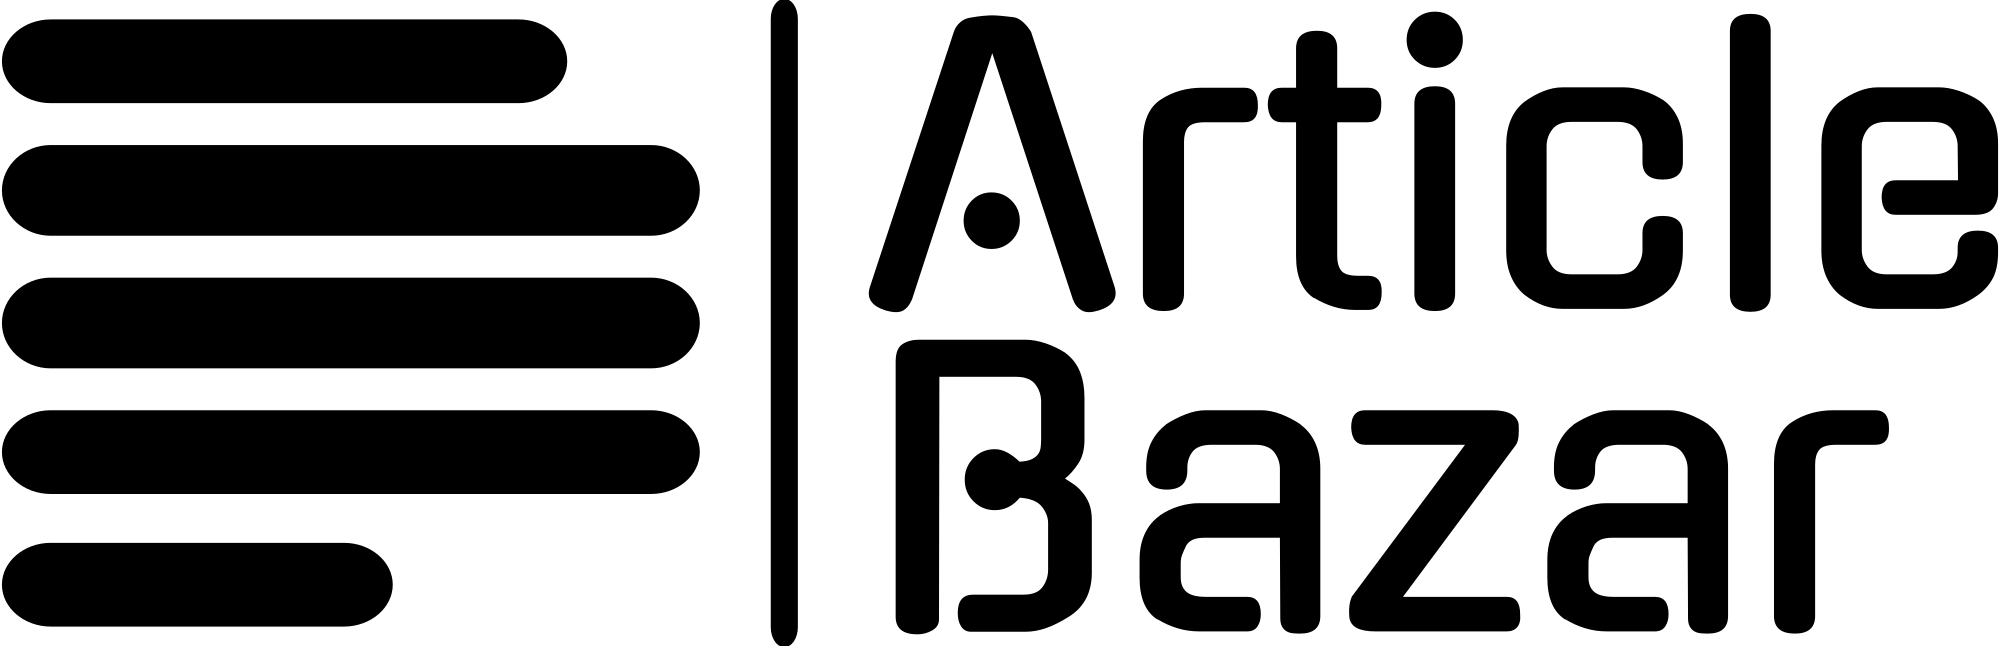 article bazar high resolution logo black on transparent background